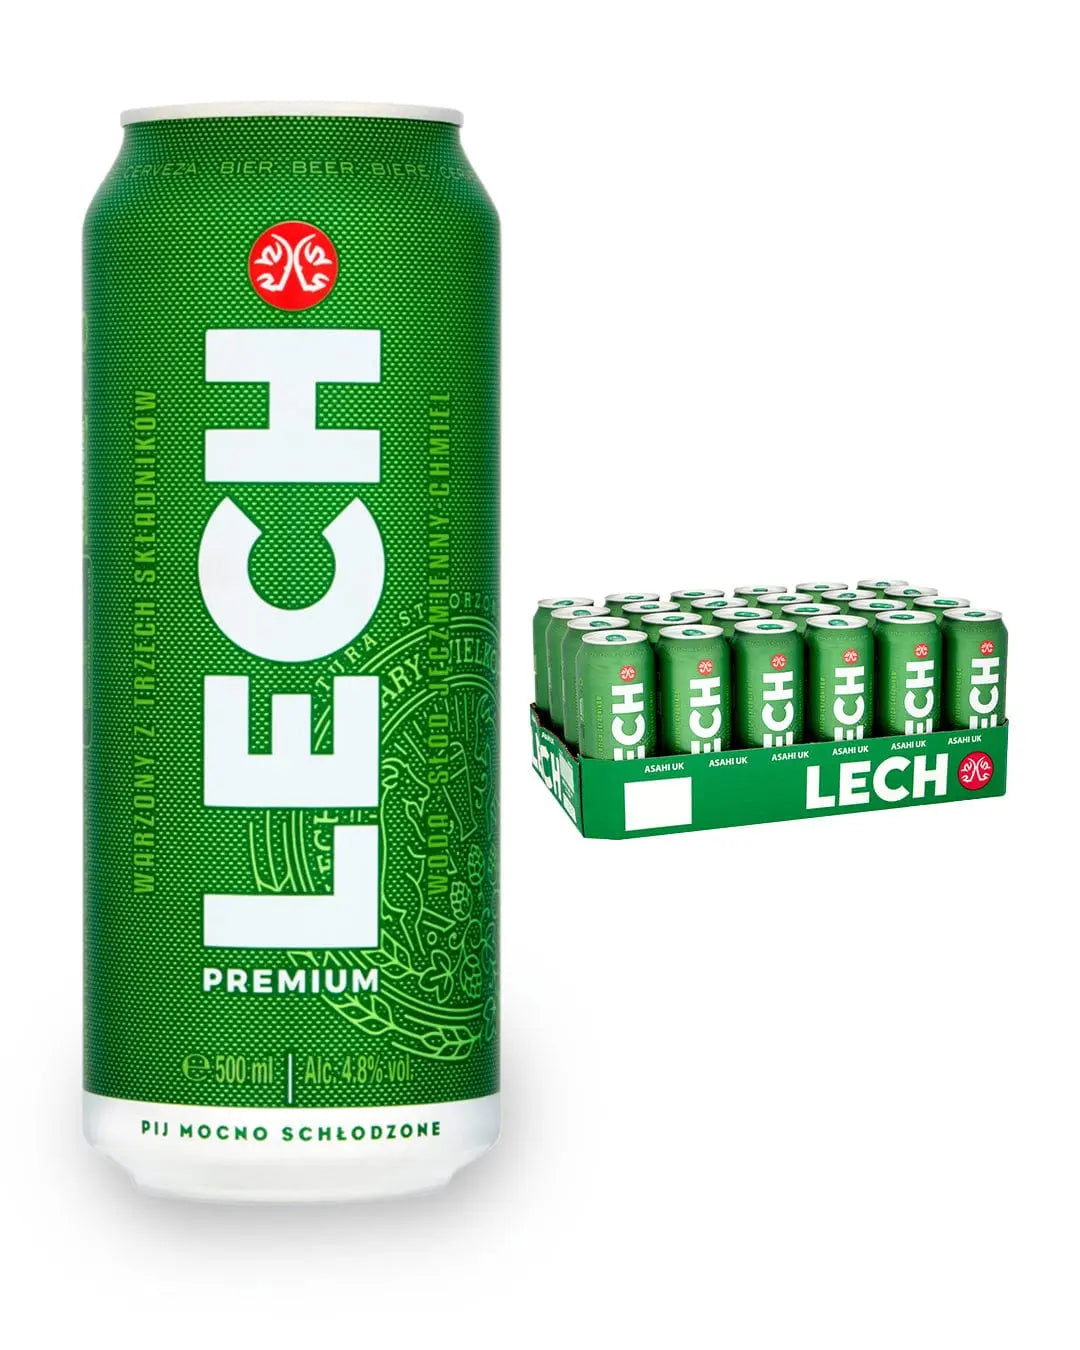 Lech Premium Lager Multipack, 24 x 500 ml Beer